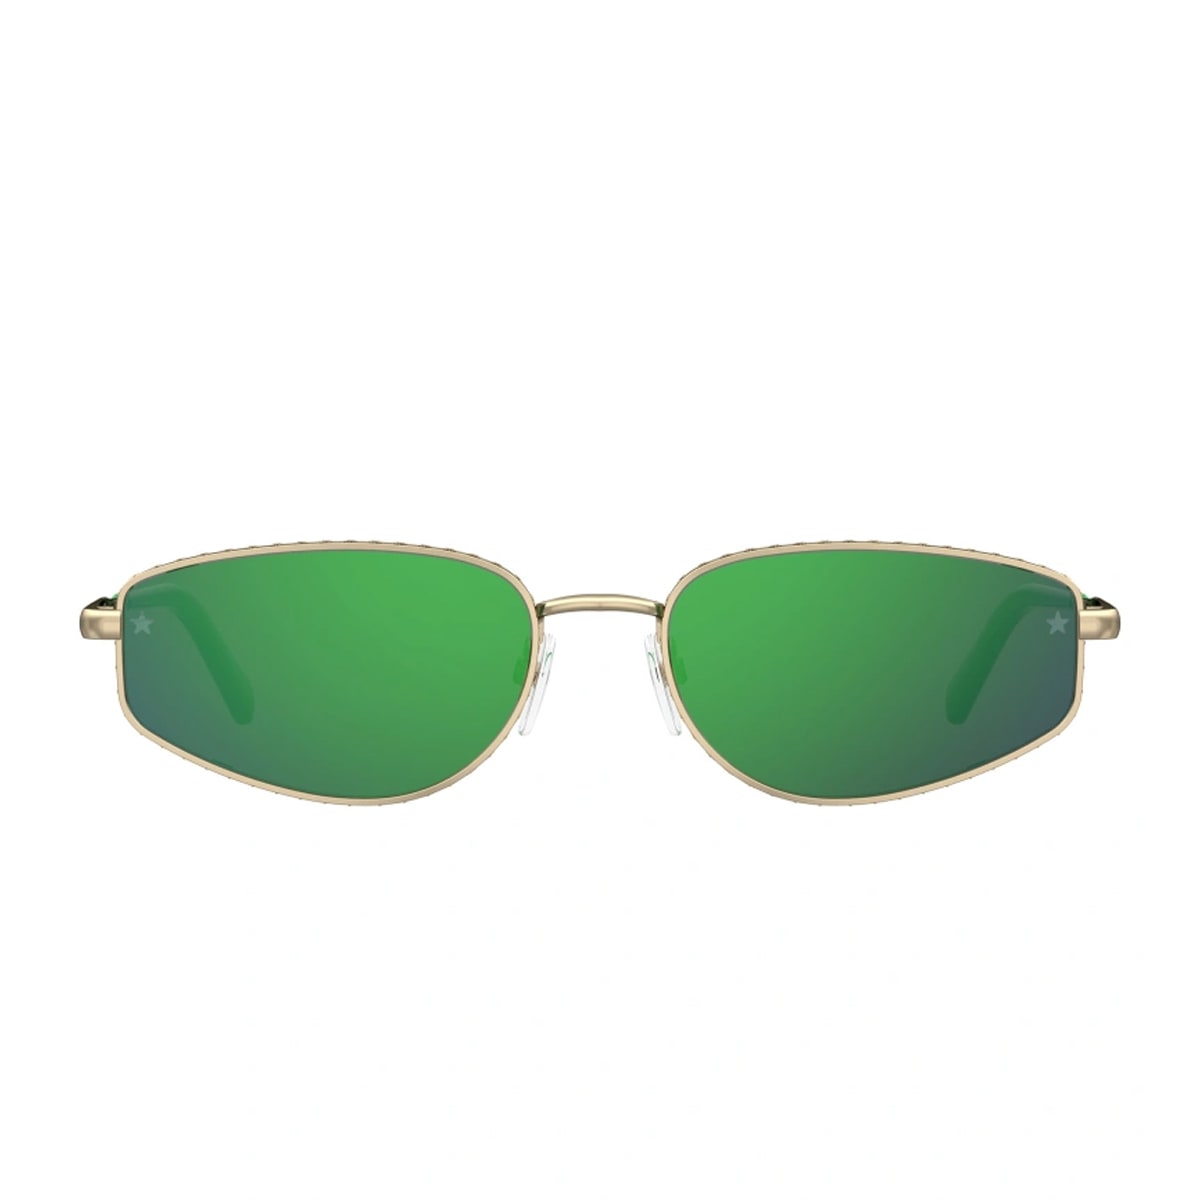 Cf 7025/s Pef/z9 Gold Green Sunglasses